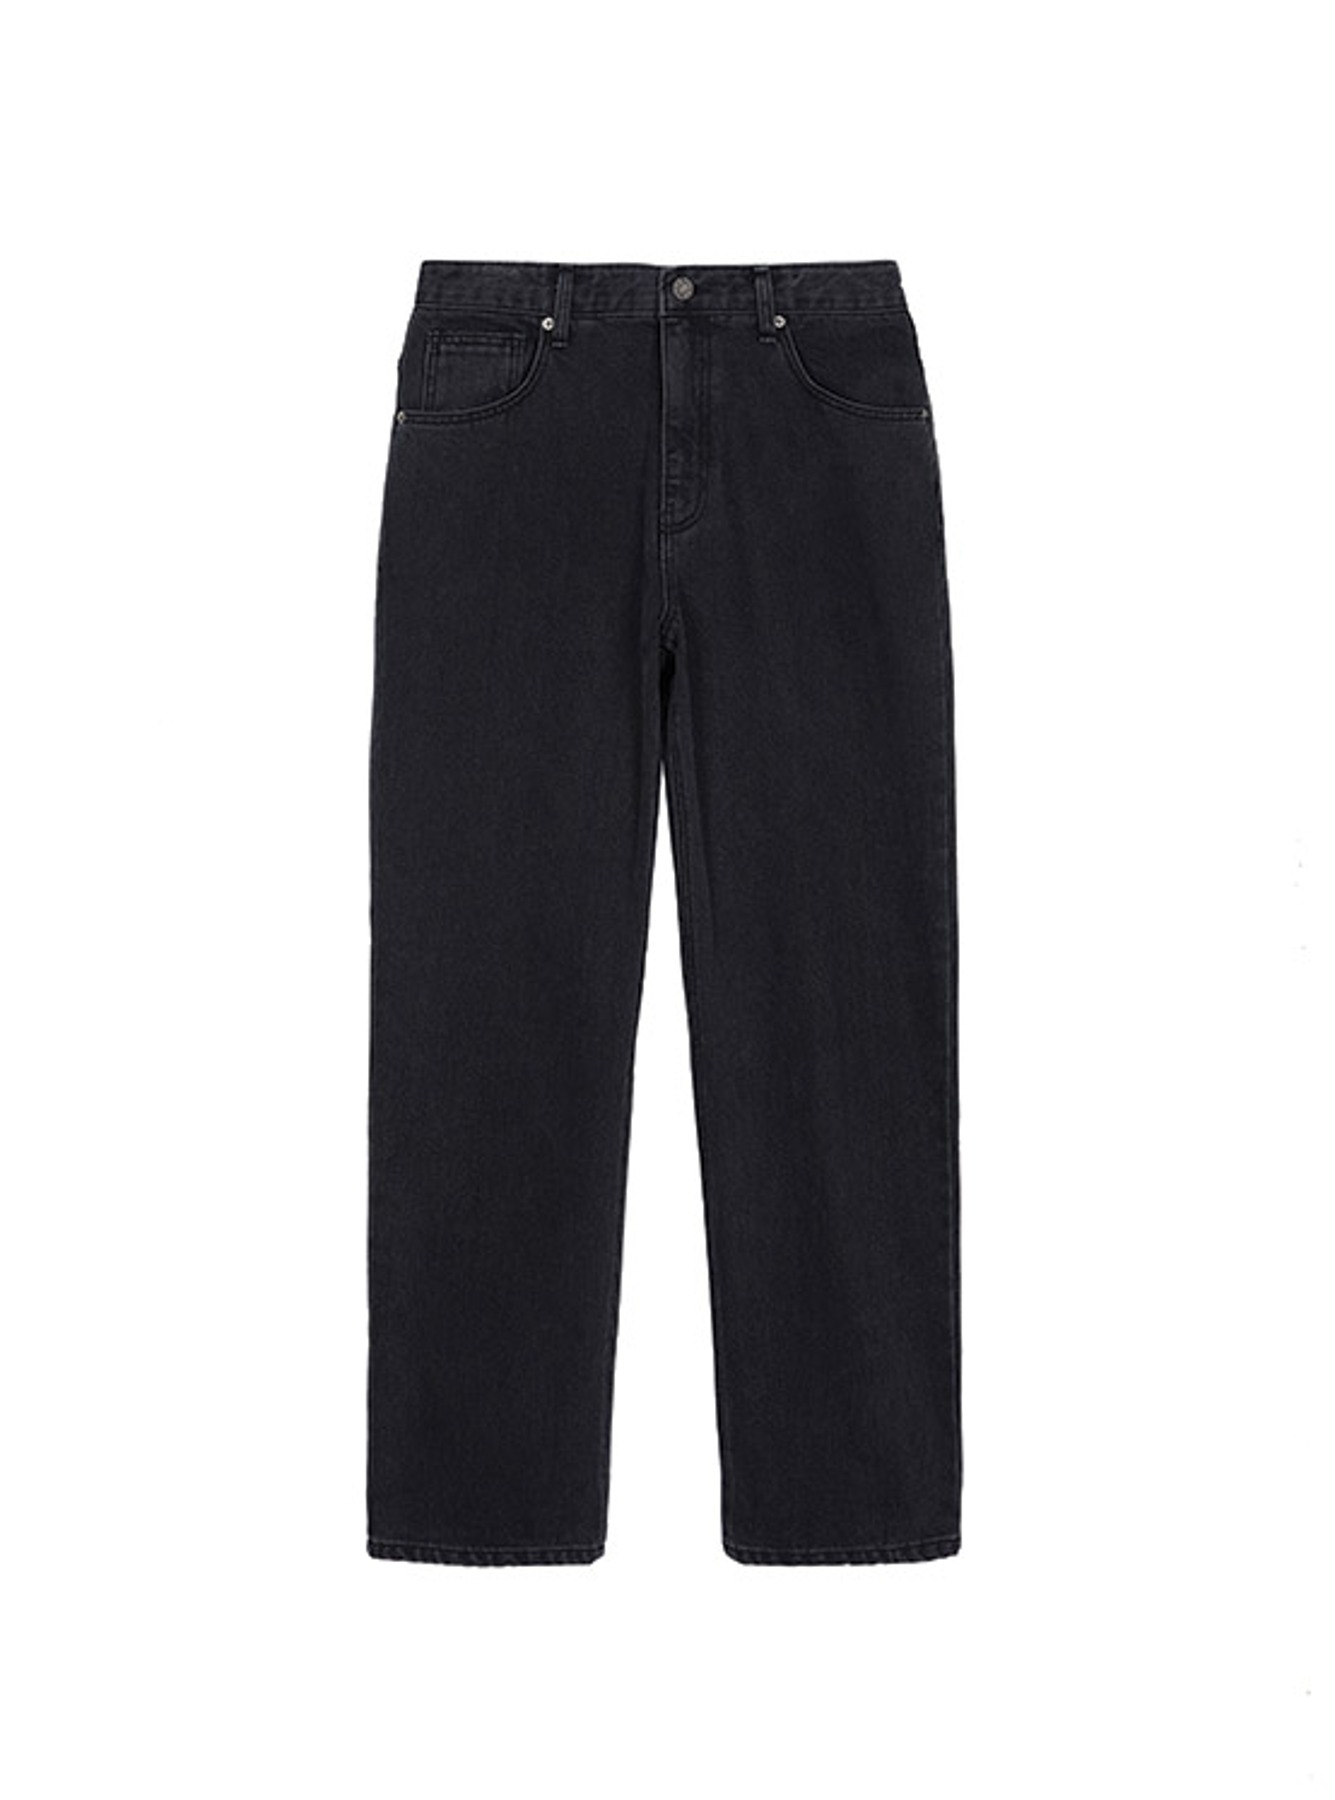 Dyeing Denim Pants in Black VJ2AL760-10